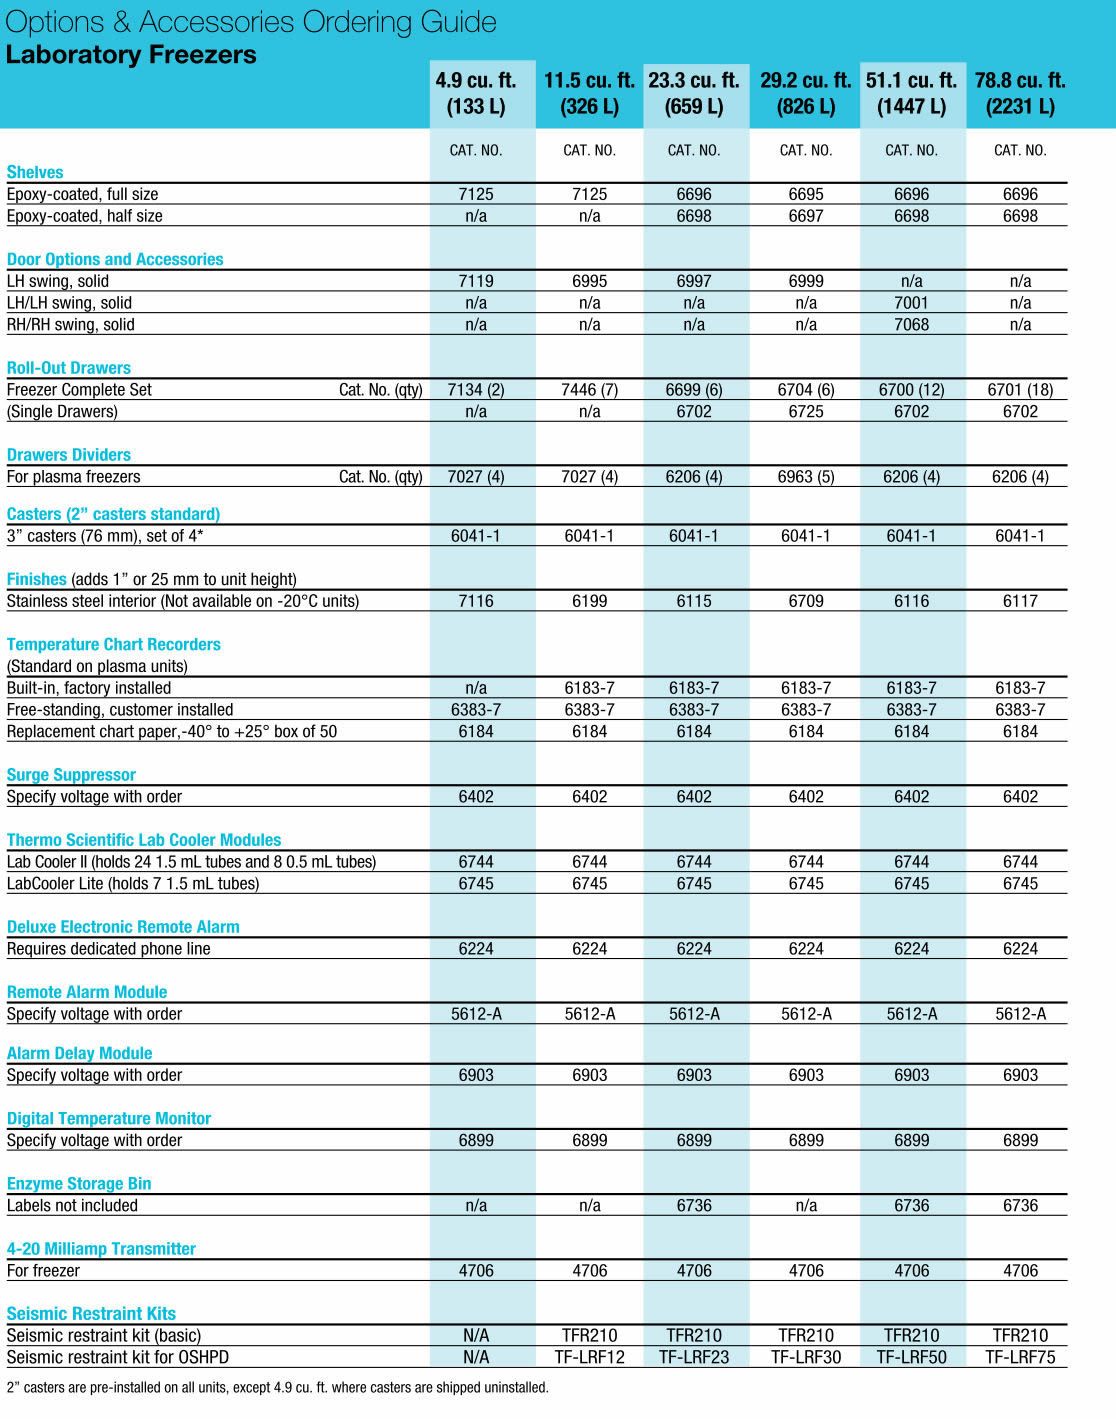 Revco Technologies Chart Paper